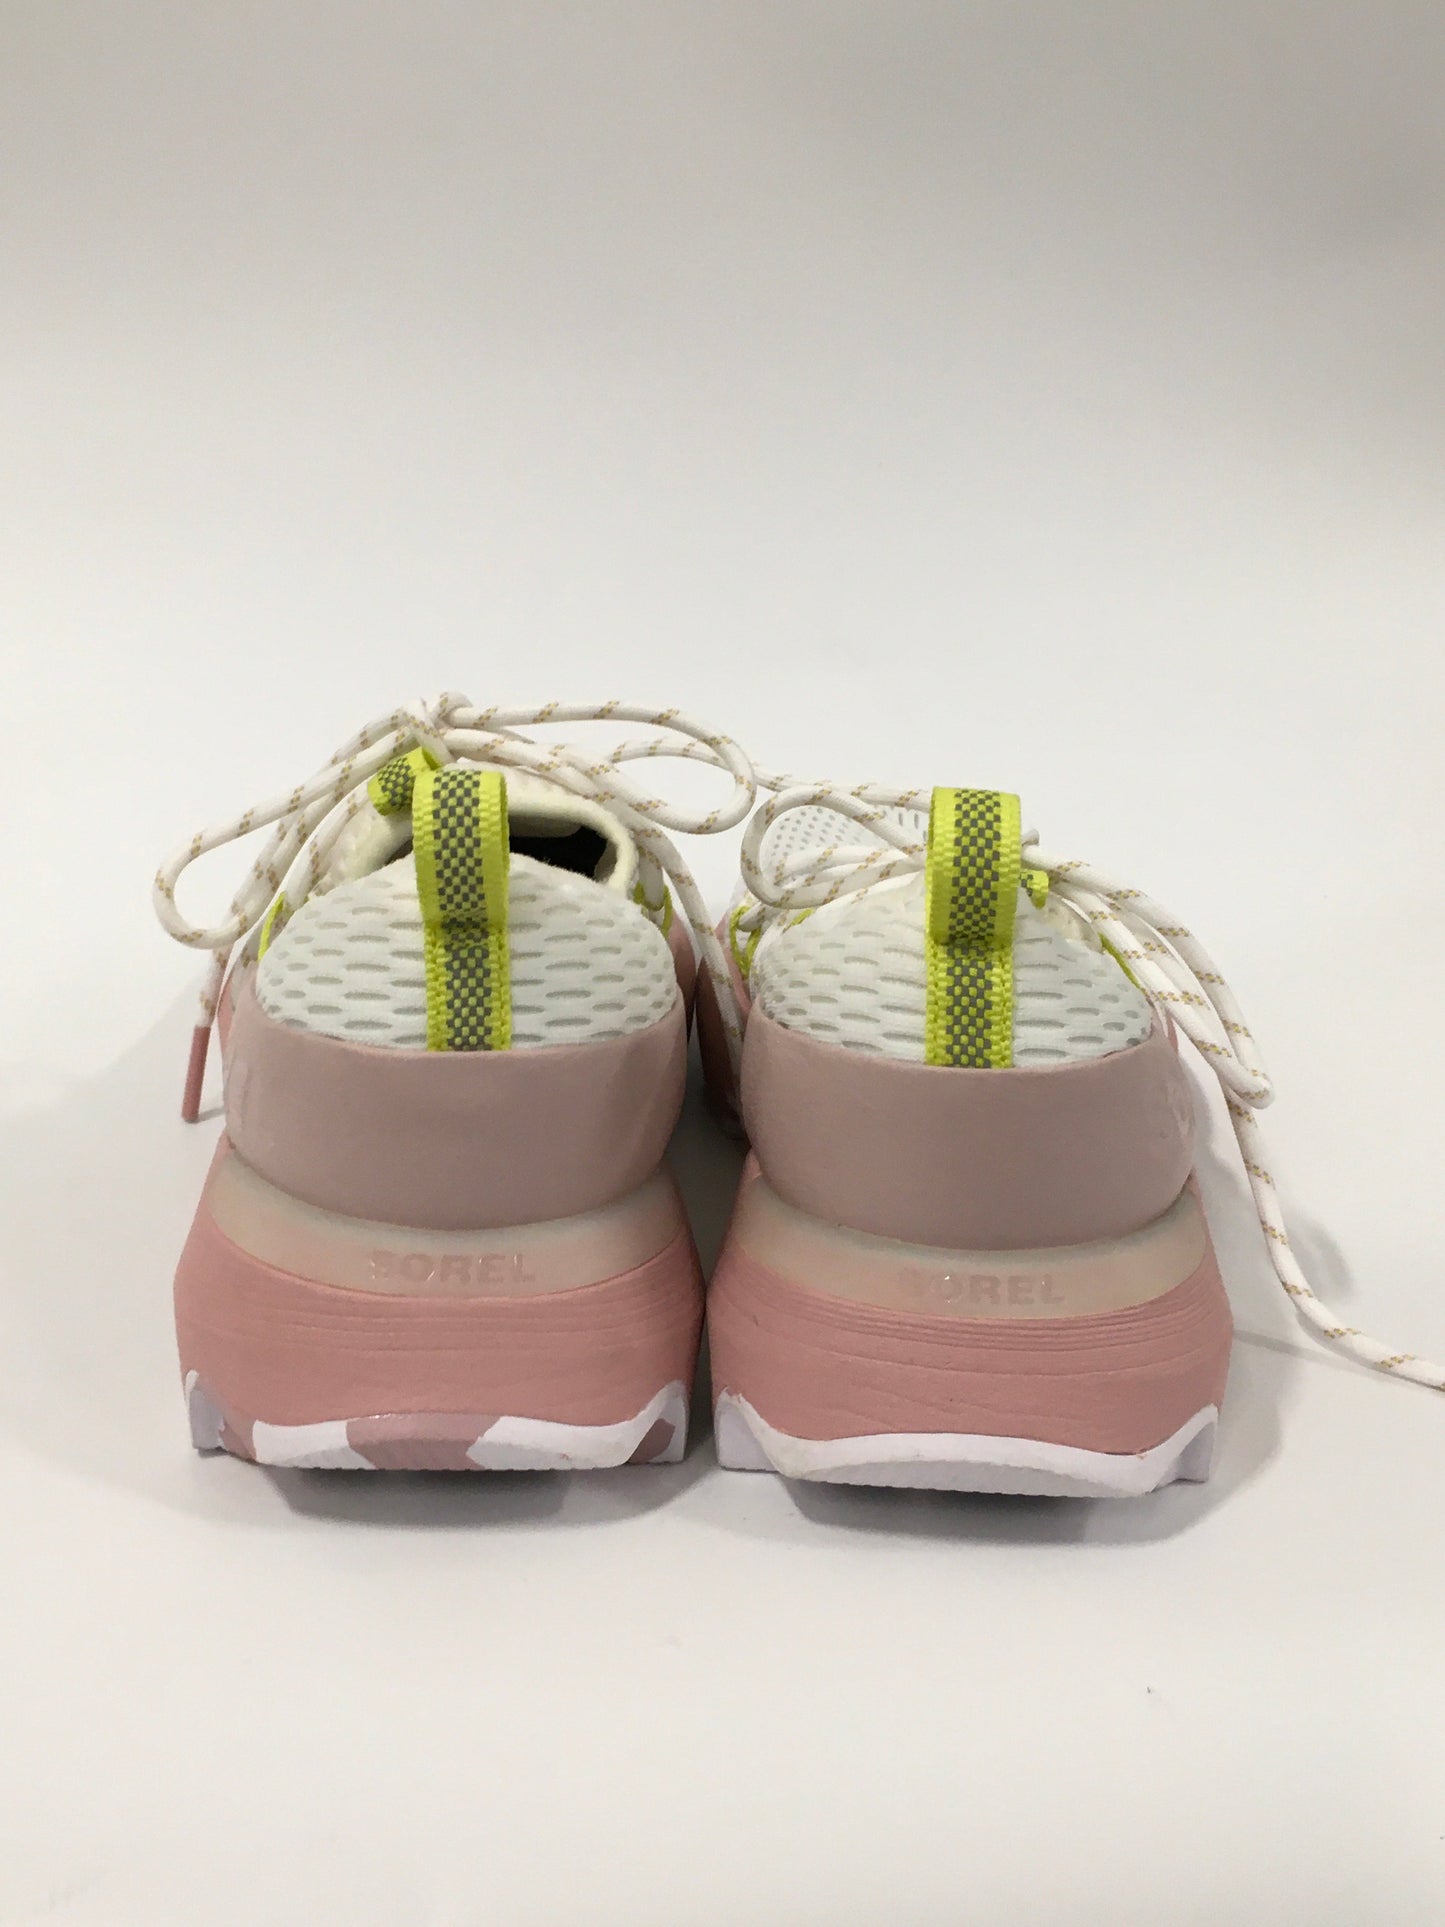 Pink & Tan Shoes Athletic Sorel, Size 8